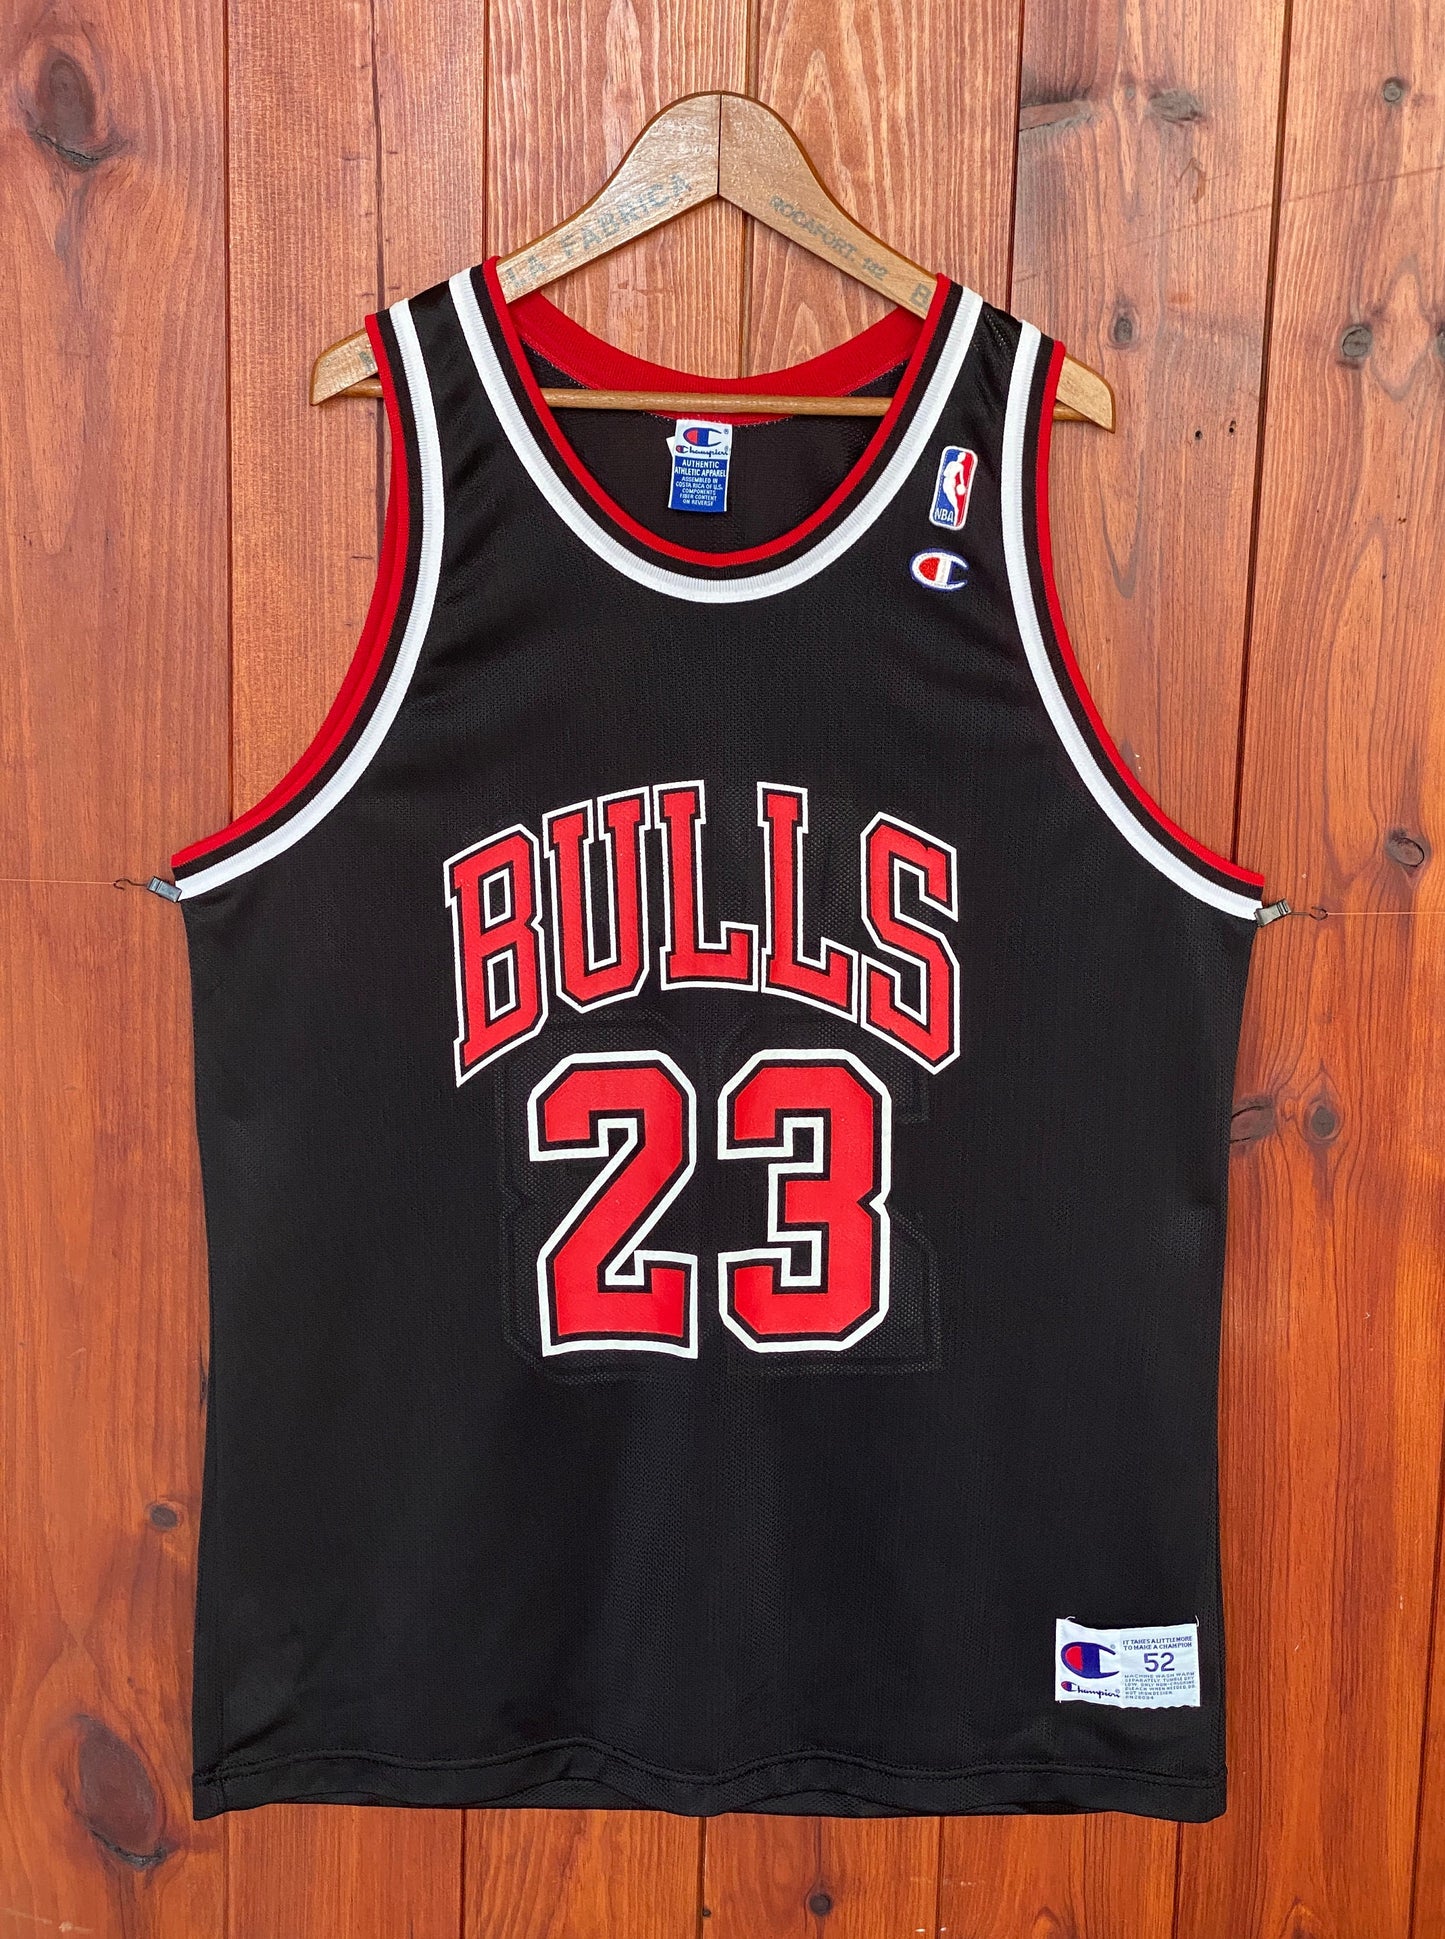 Size 52. 90s Vintage Chicago Bulls Michael Jordan #23 NBA jersey